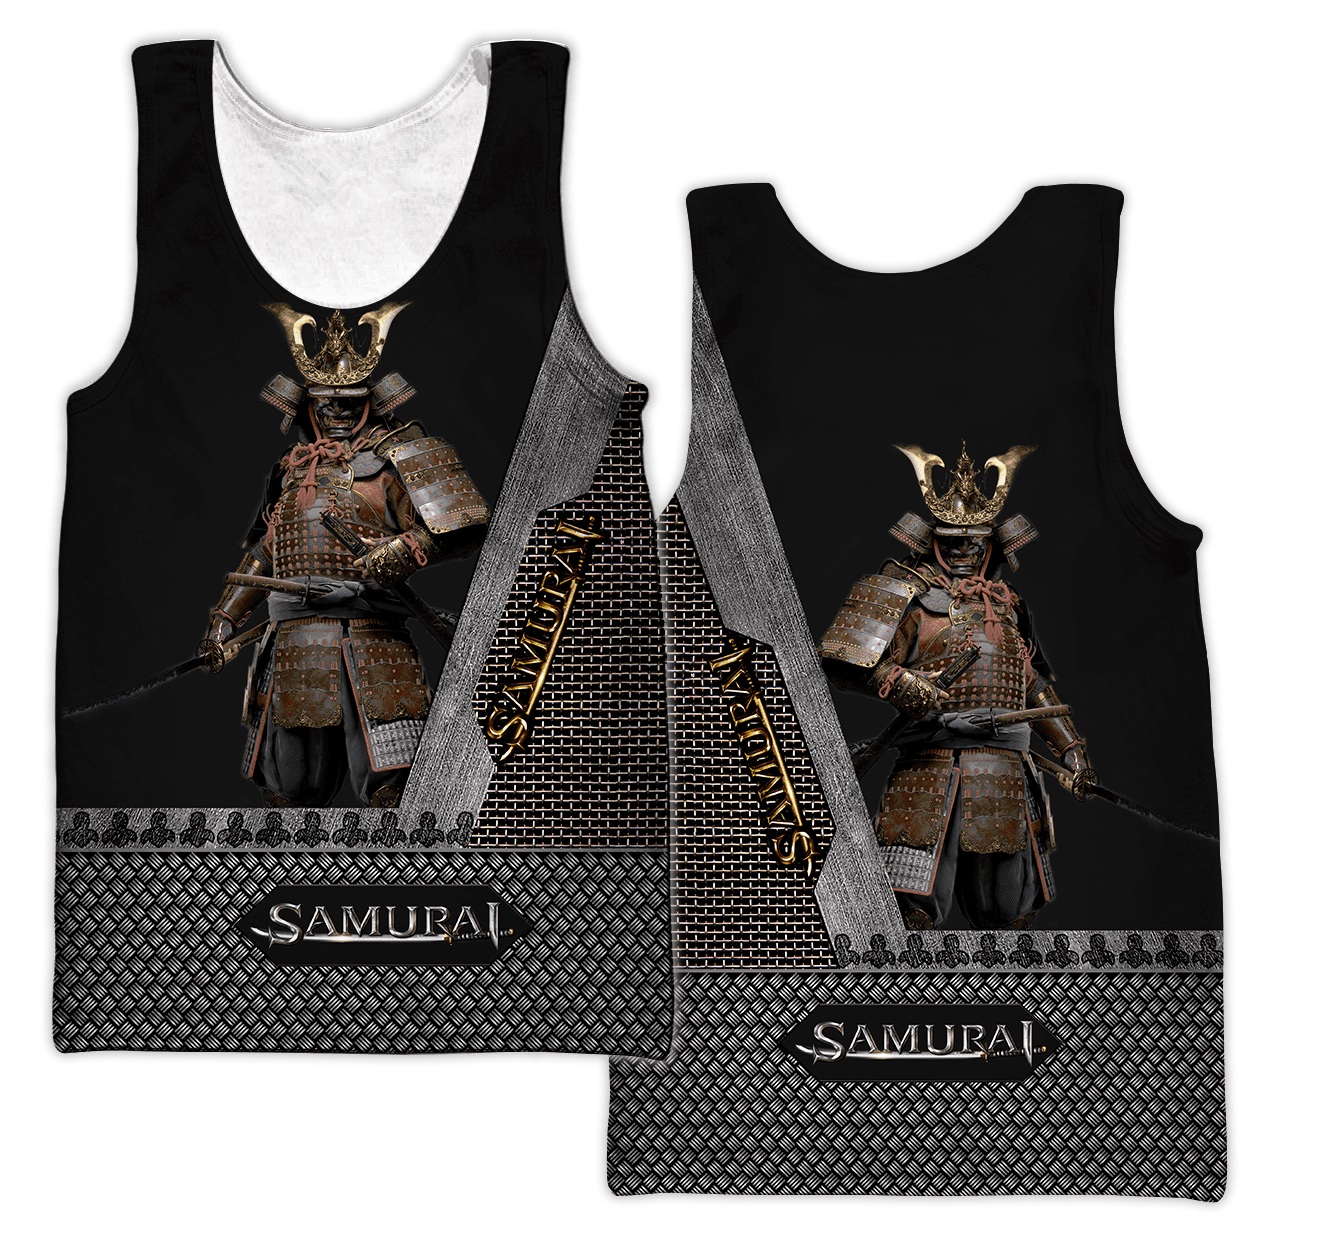 Samurai all over printed tank top